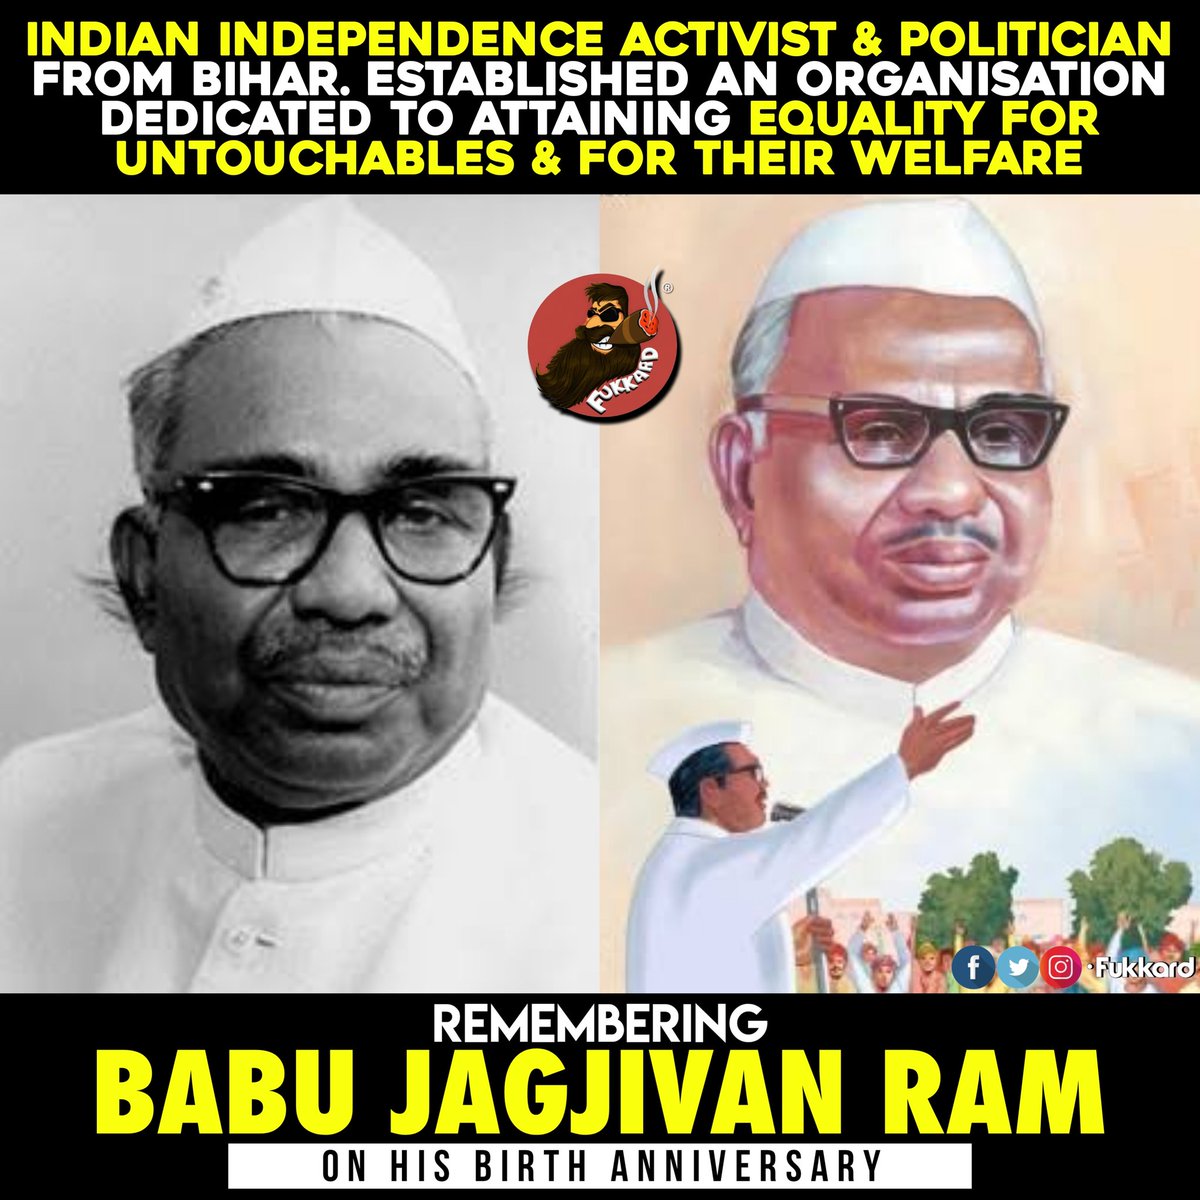 Remembering #BabuJagJivanRam